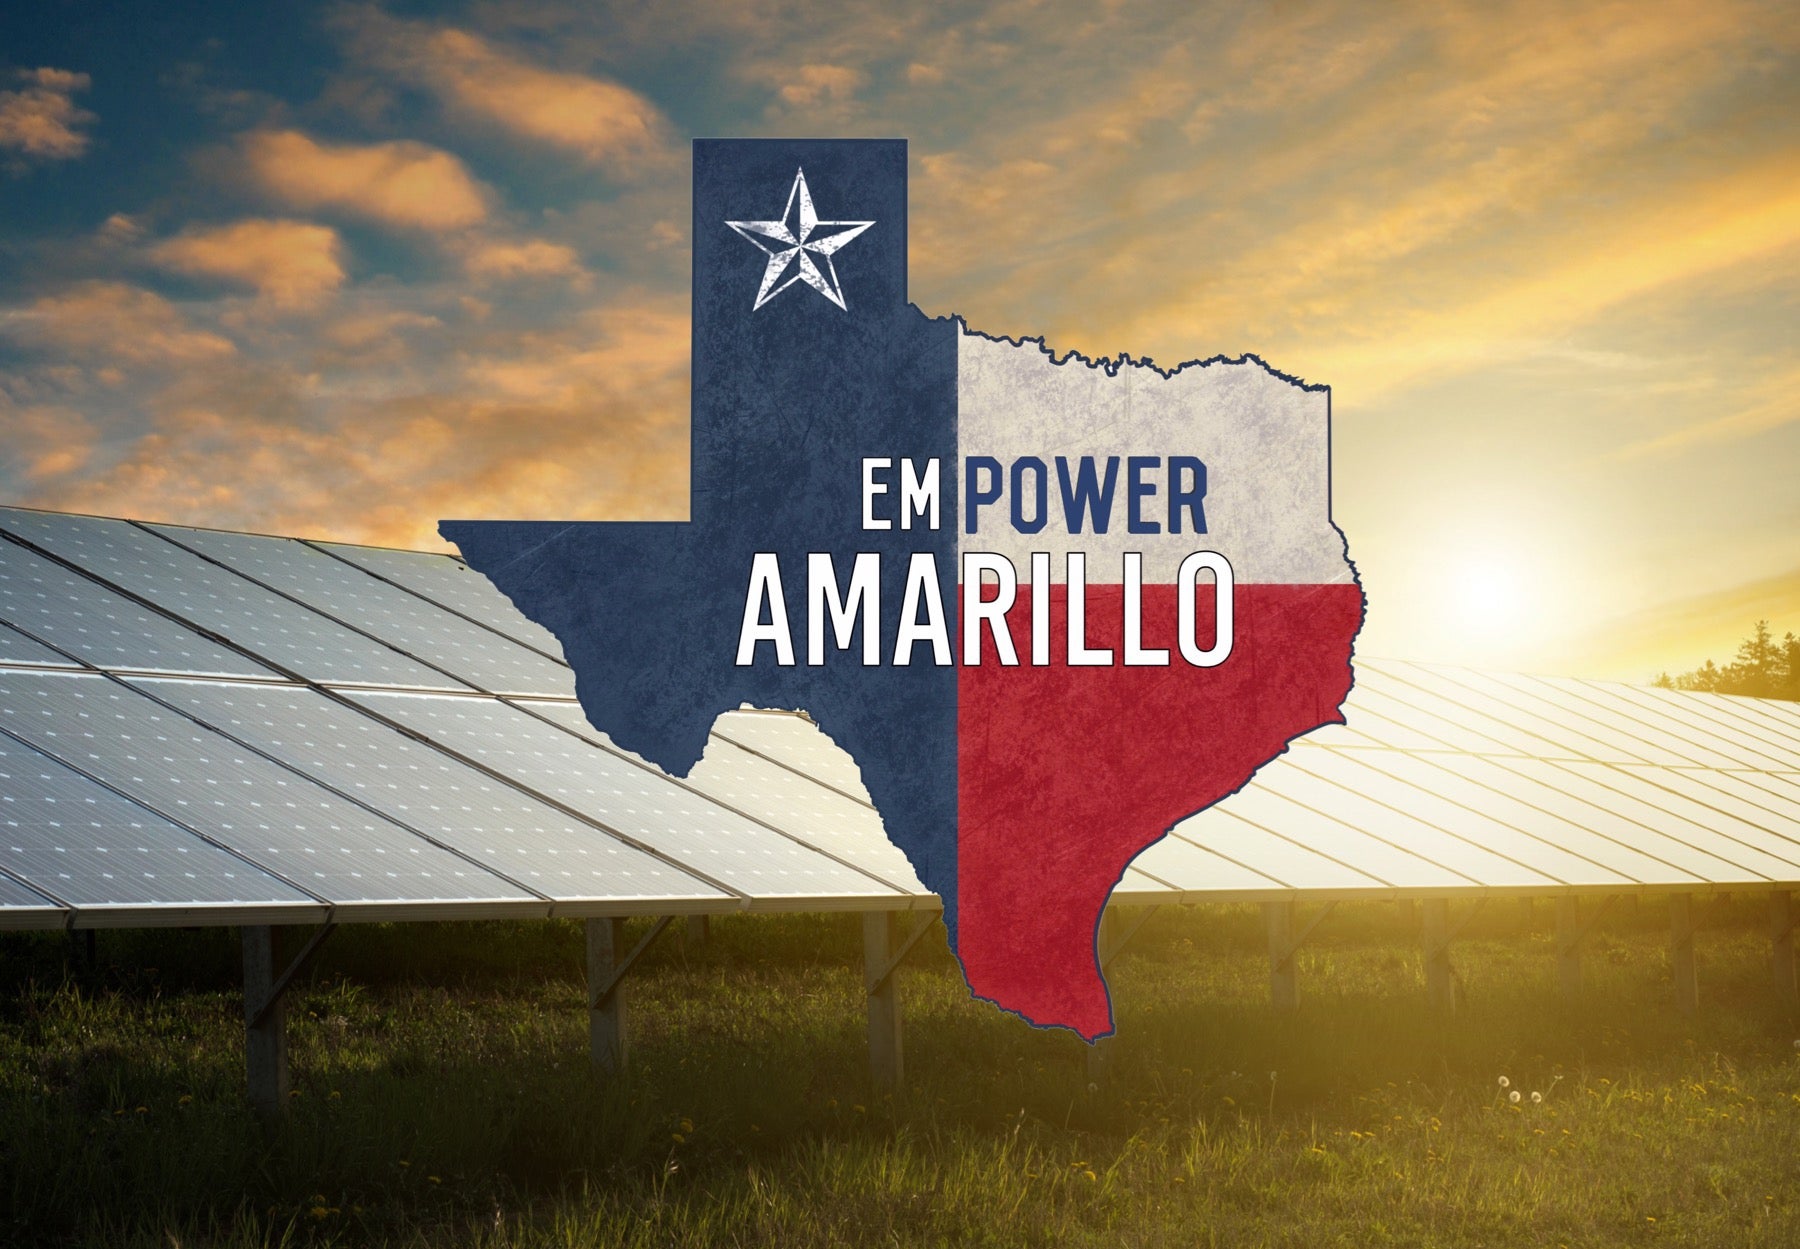 Empower Amarillo solar reviews, complaints, address & solar panels cost